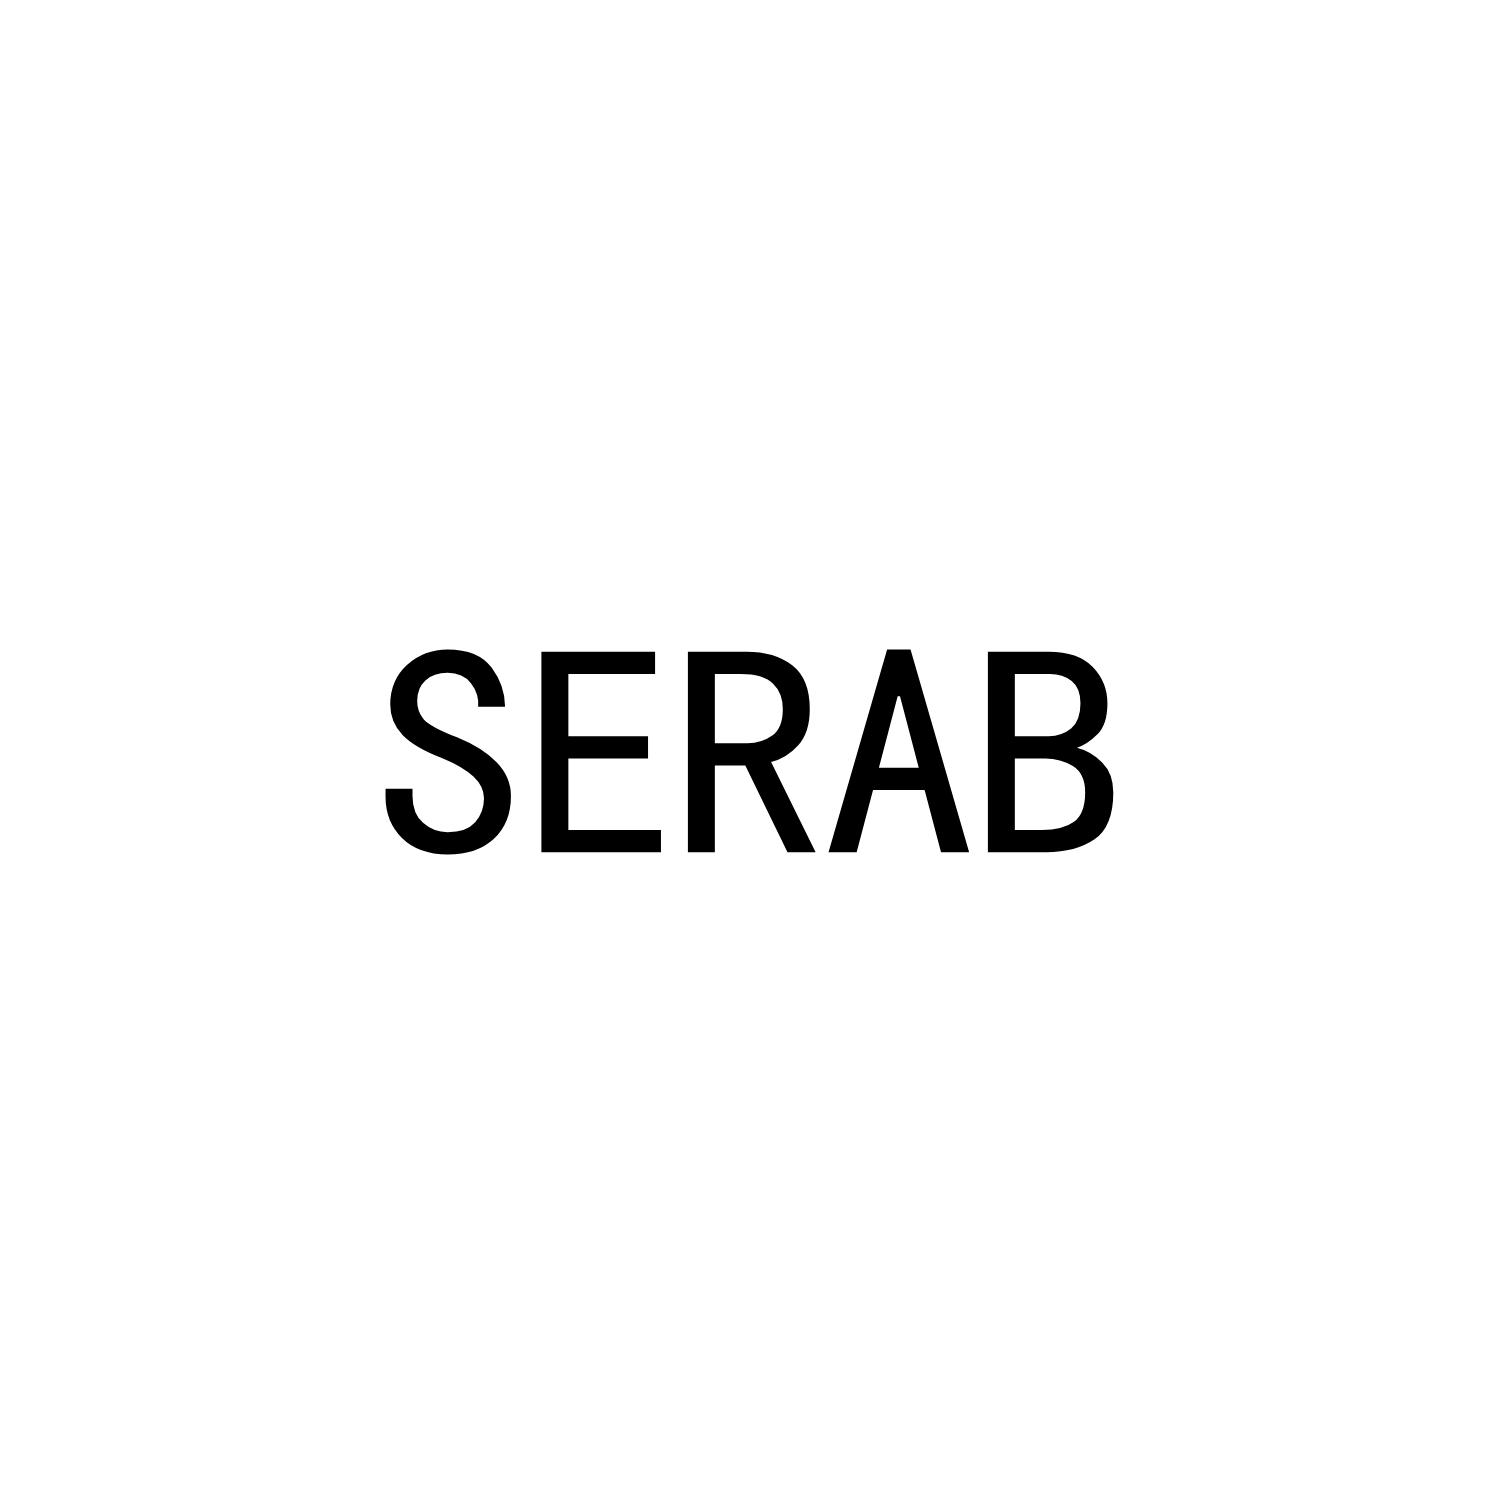 SERAB